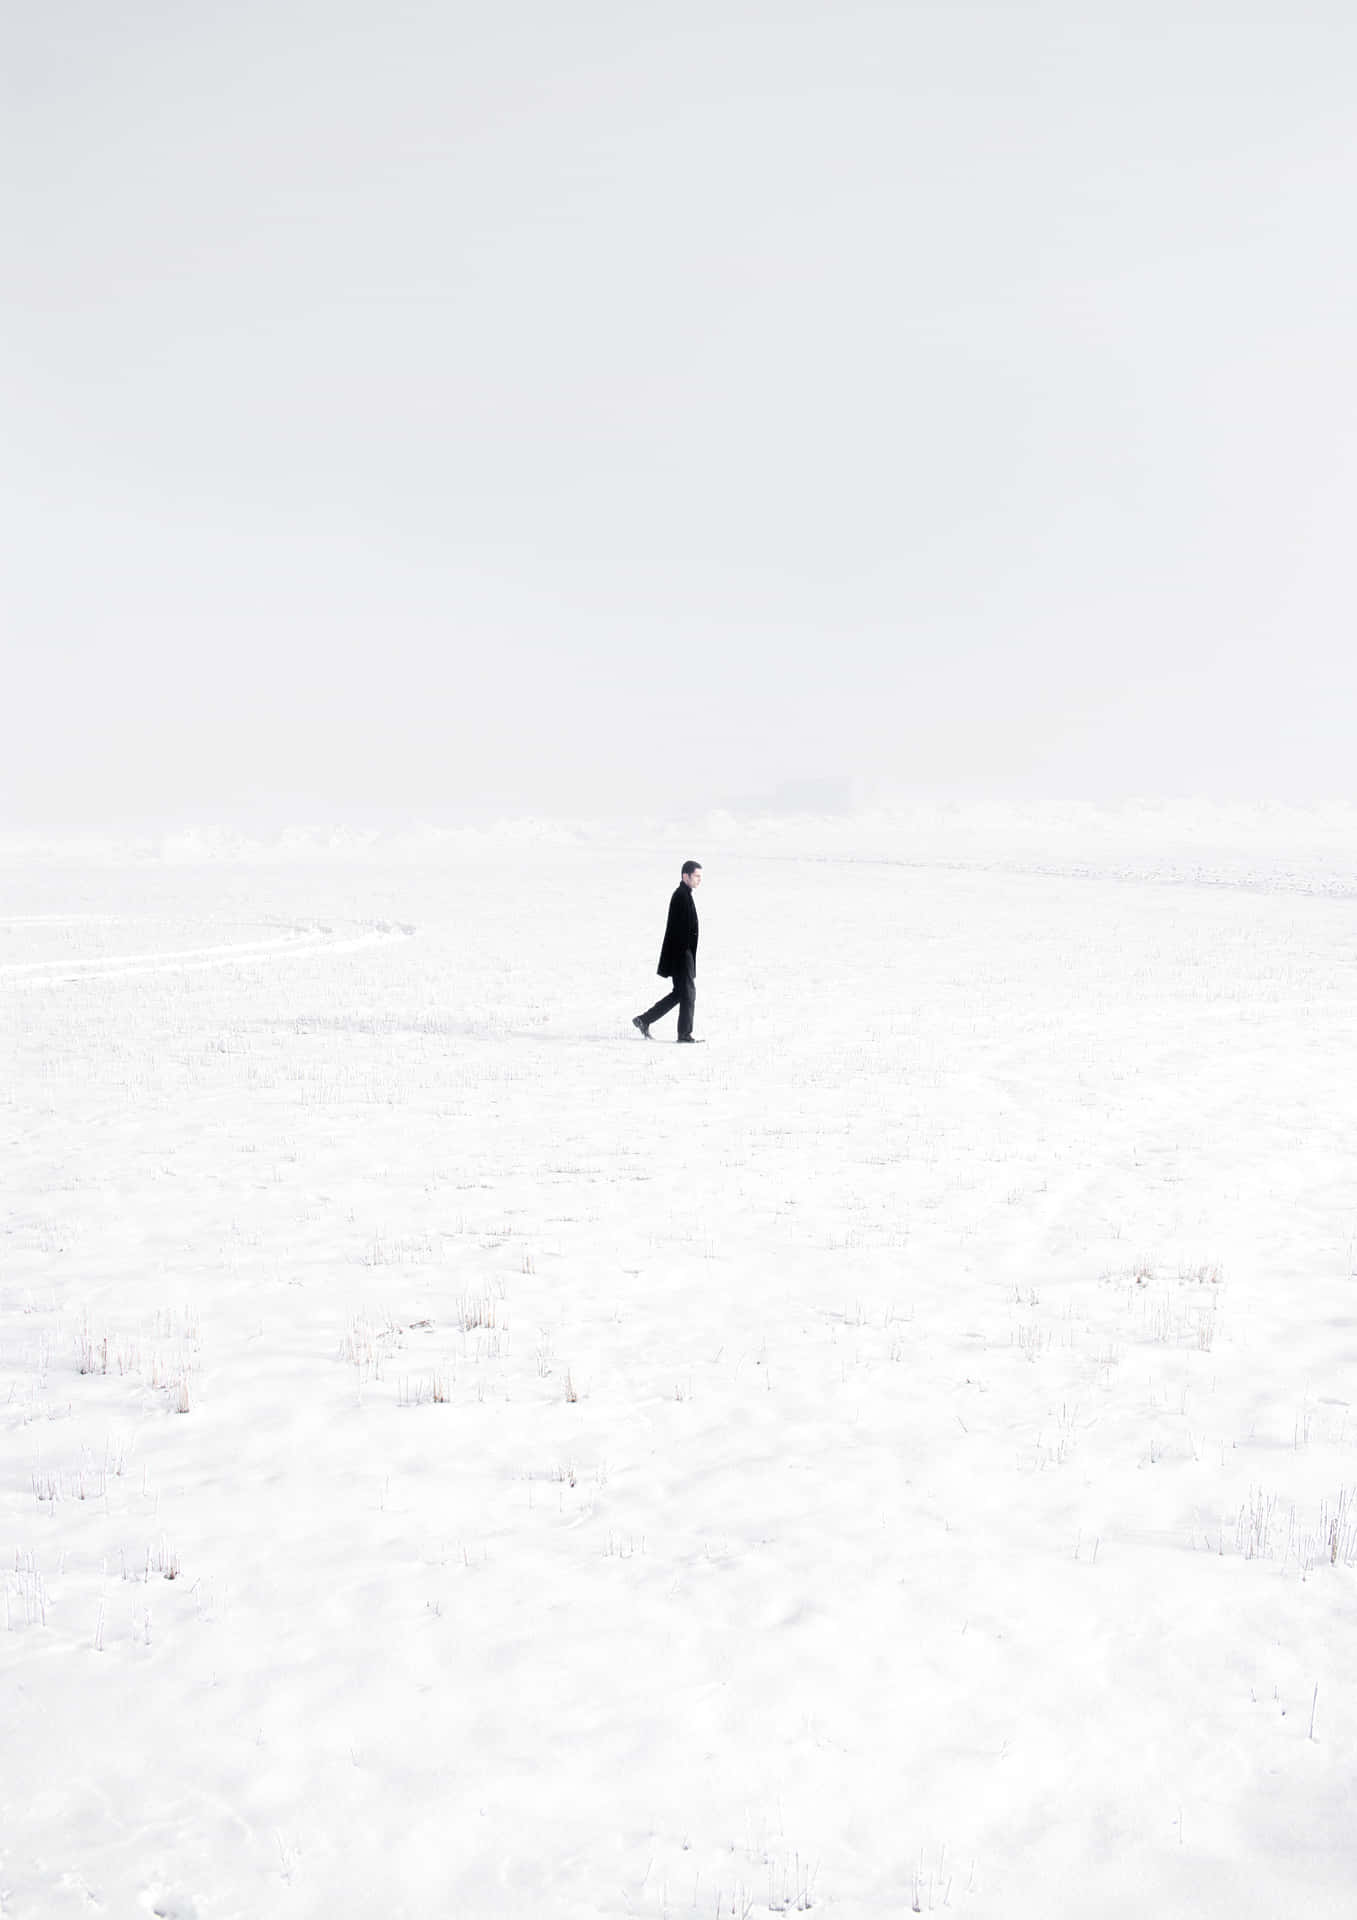 Desolate Snow Land Portrait Lonely Man Wallpaper